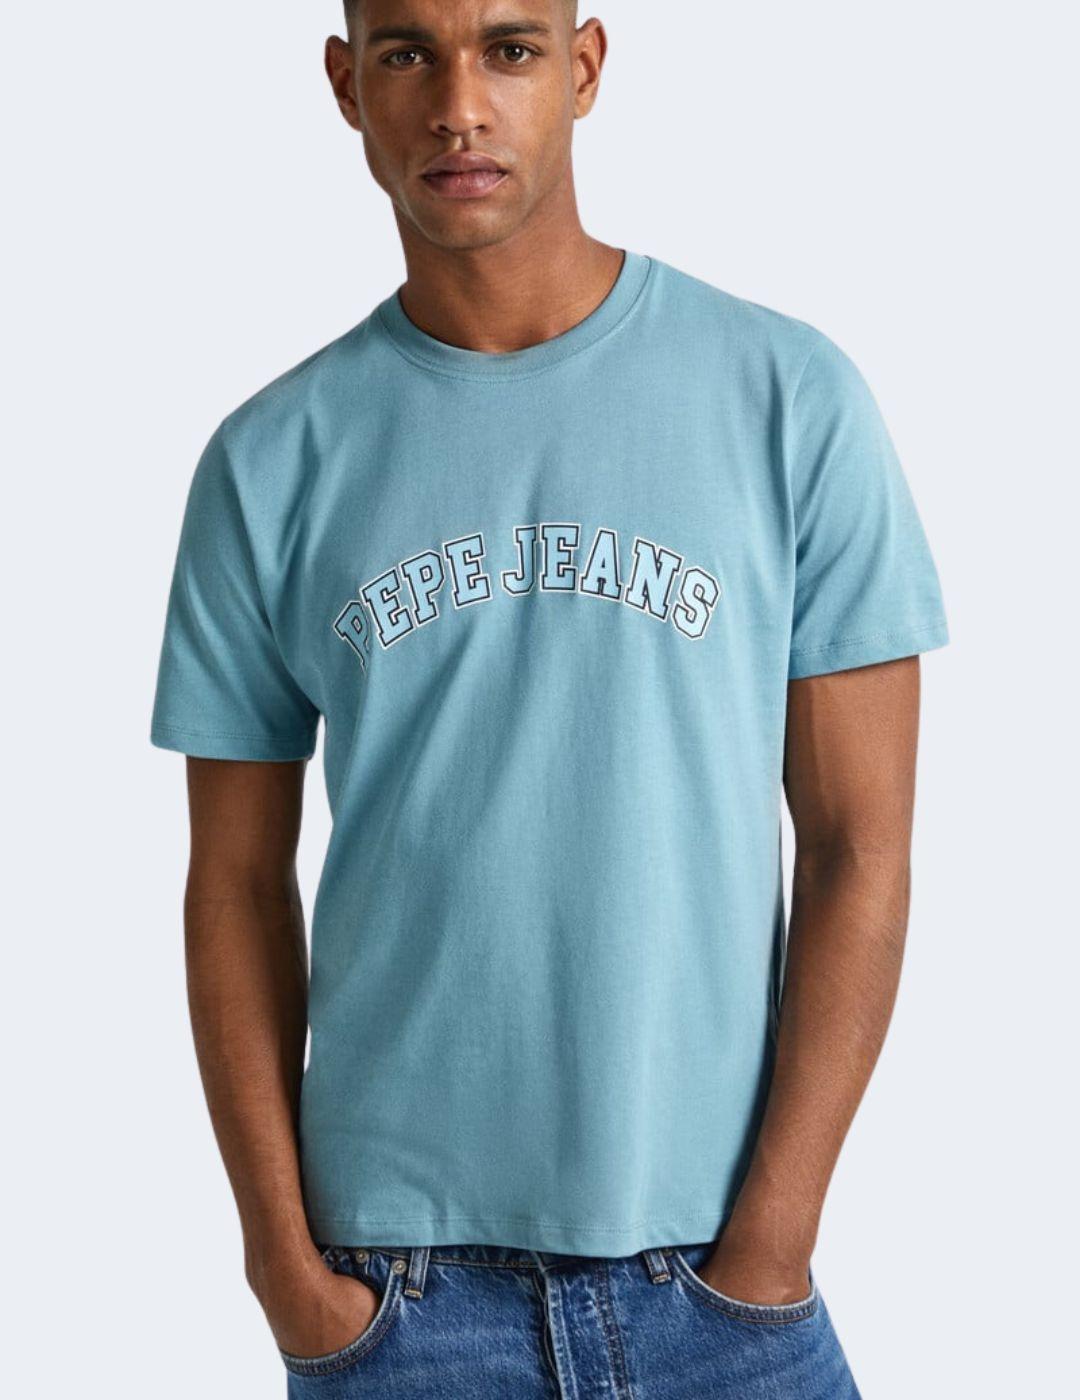 Camiseta Pepe Jeans Hombre Clement Azul